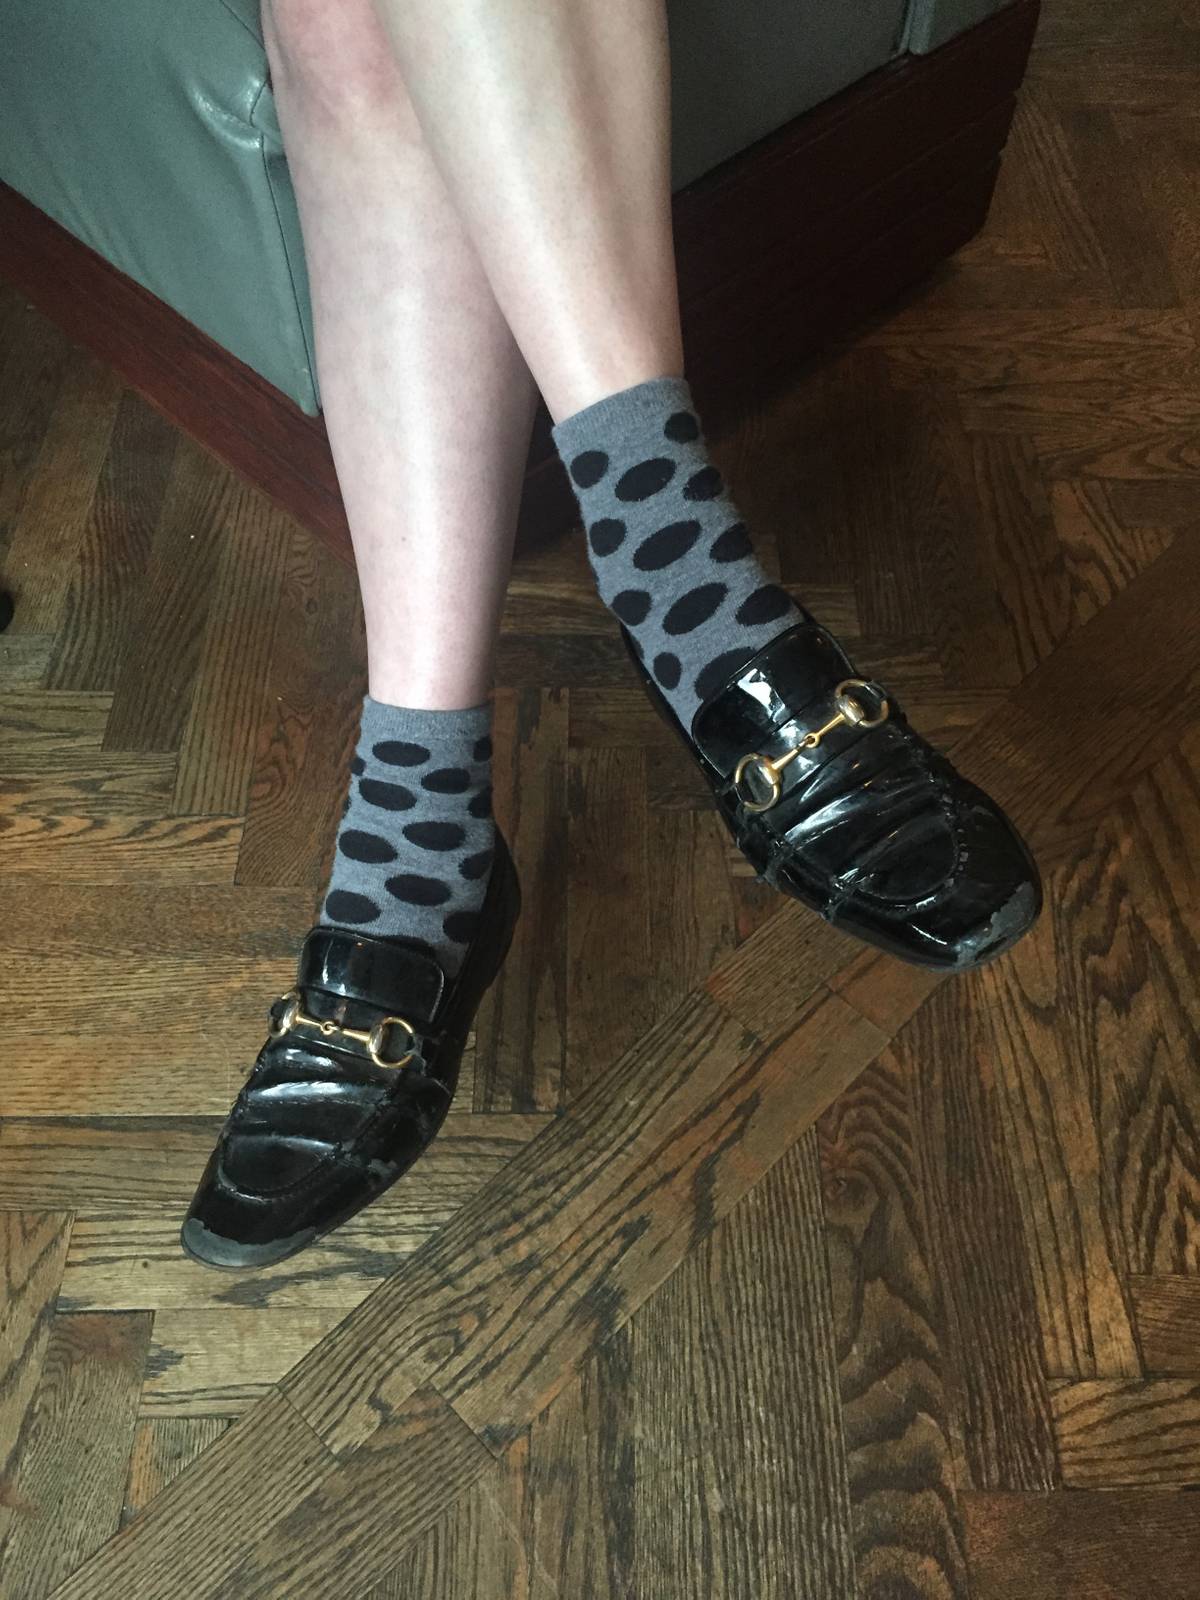 Natasha Lyonne’s beloved Gucci loafers. (Image: Periel Aschenbrand)